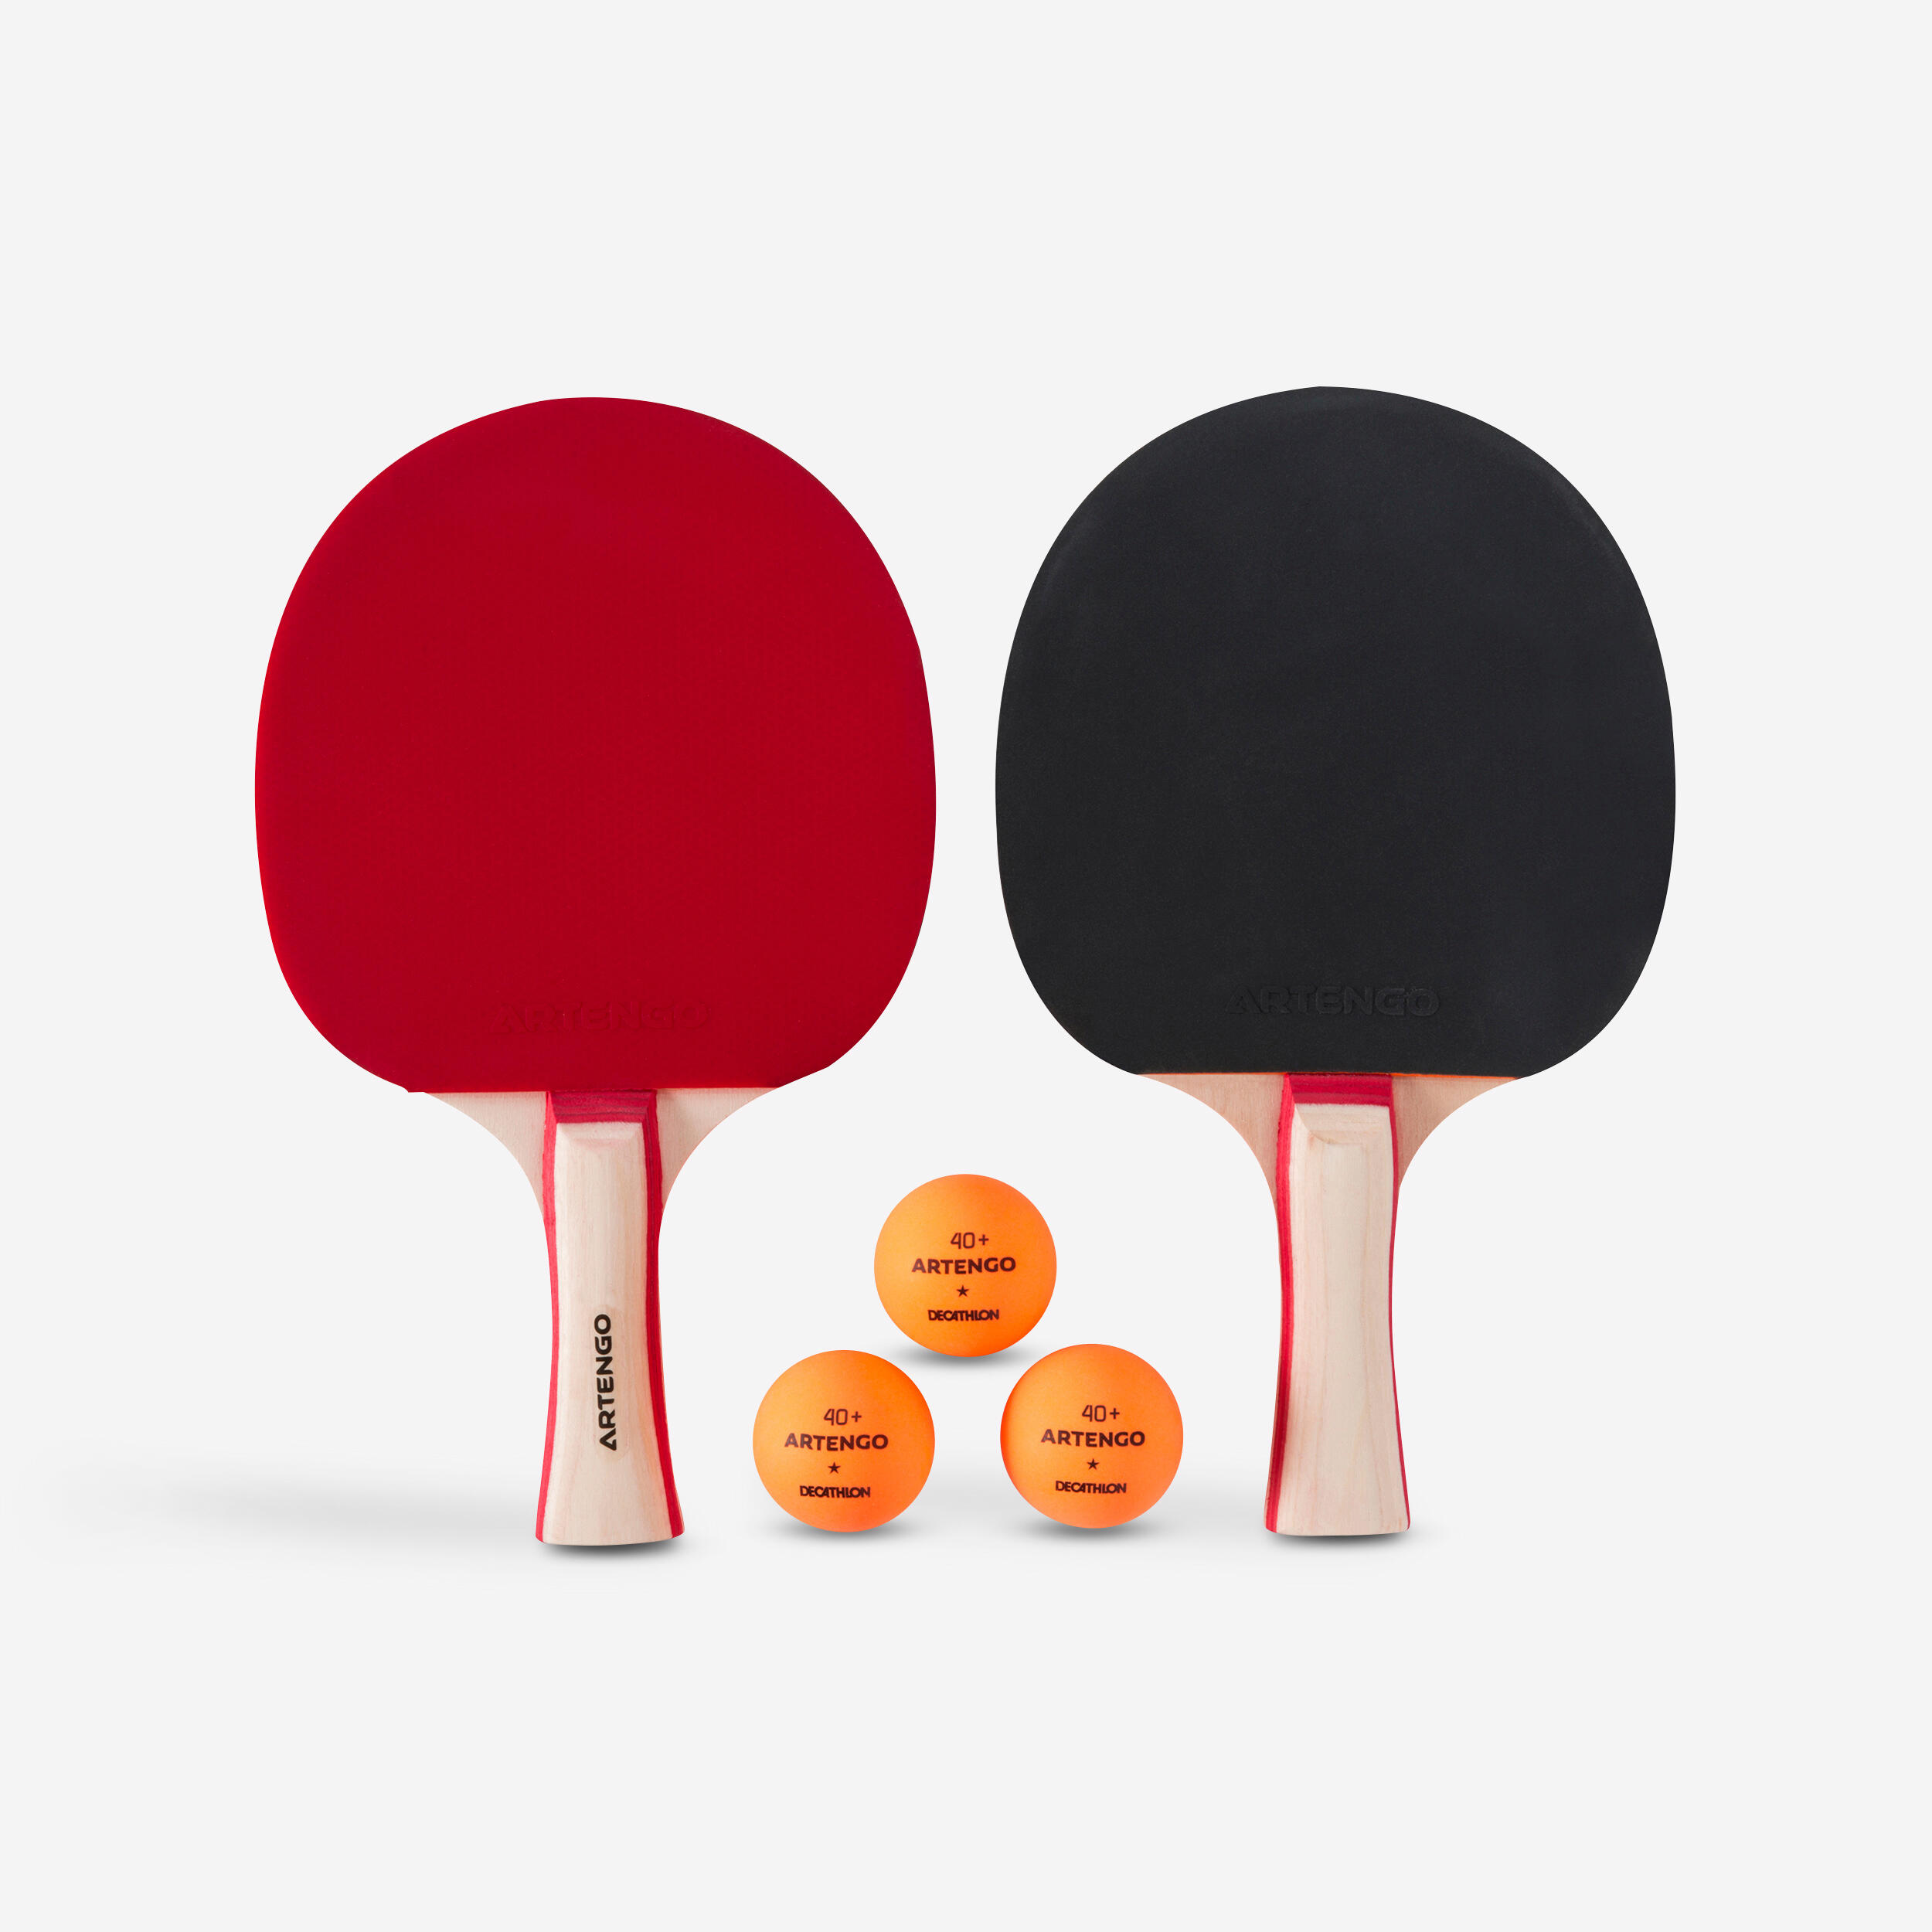 decathlon ping pong balls